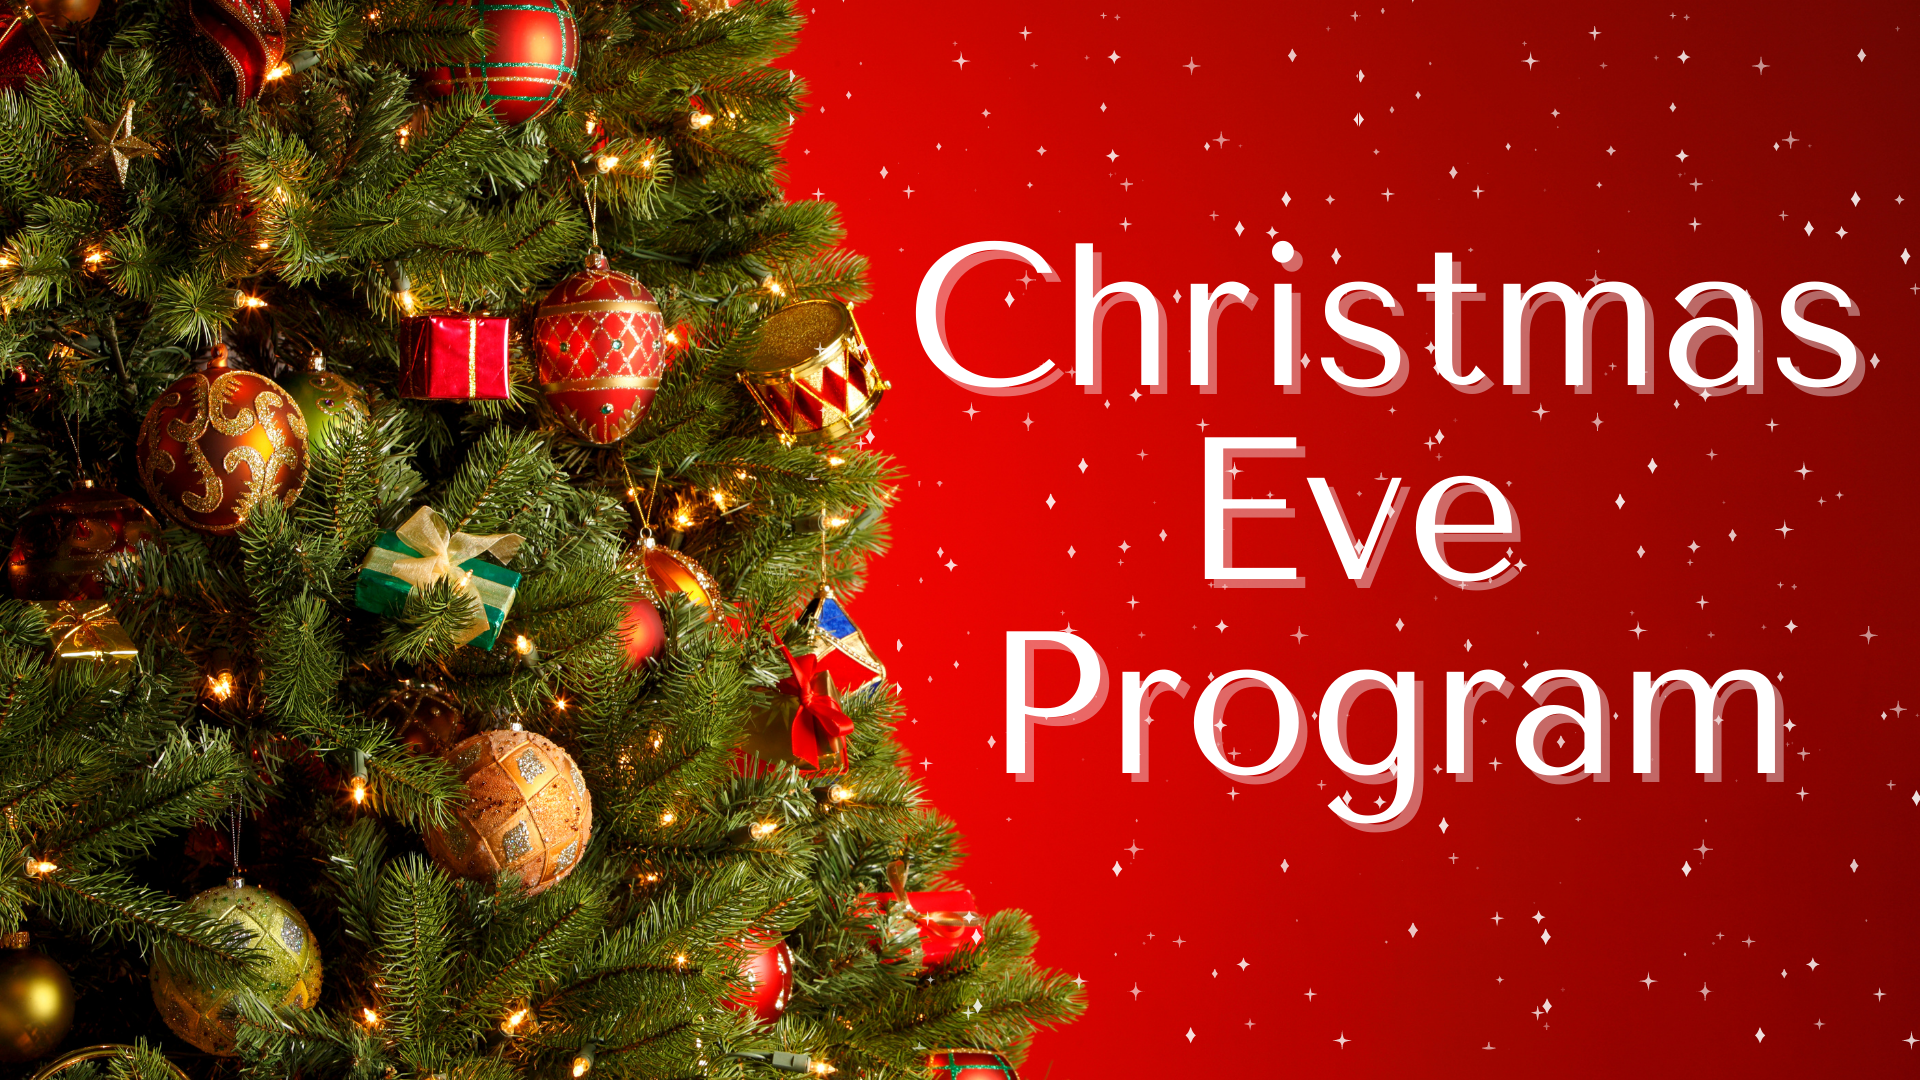 Christmas Eve Program at From The Heart of Atlanta